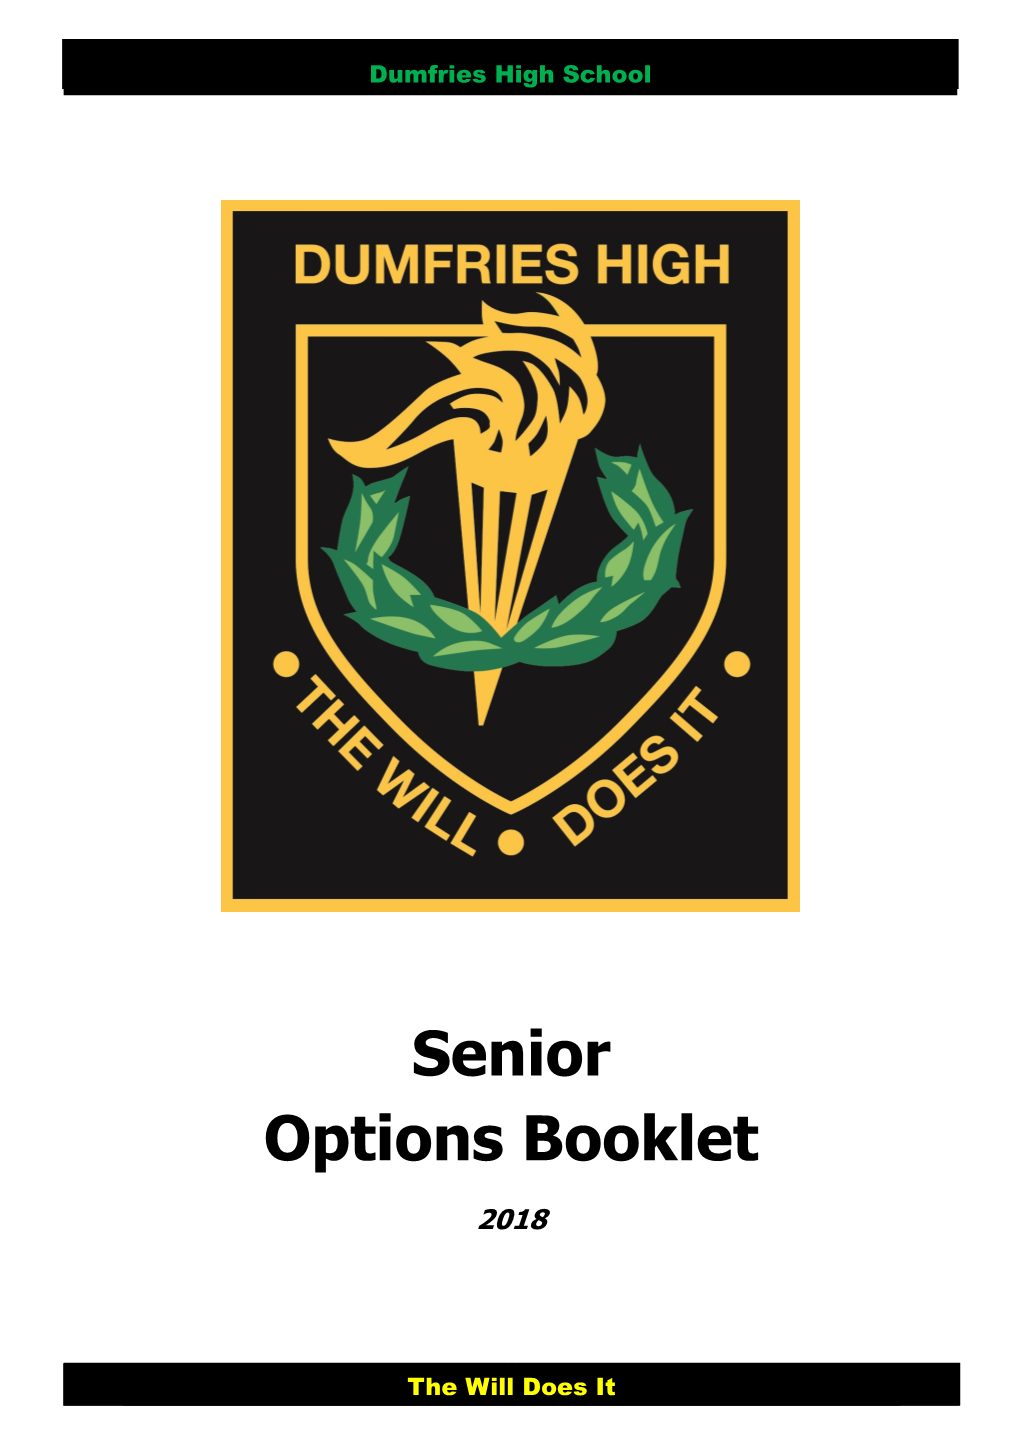 Senior Options Booklet